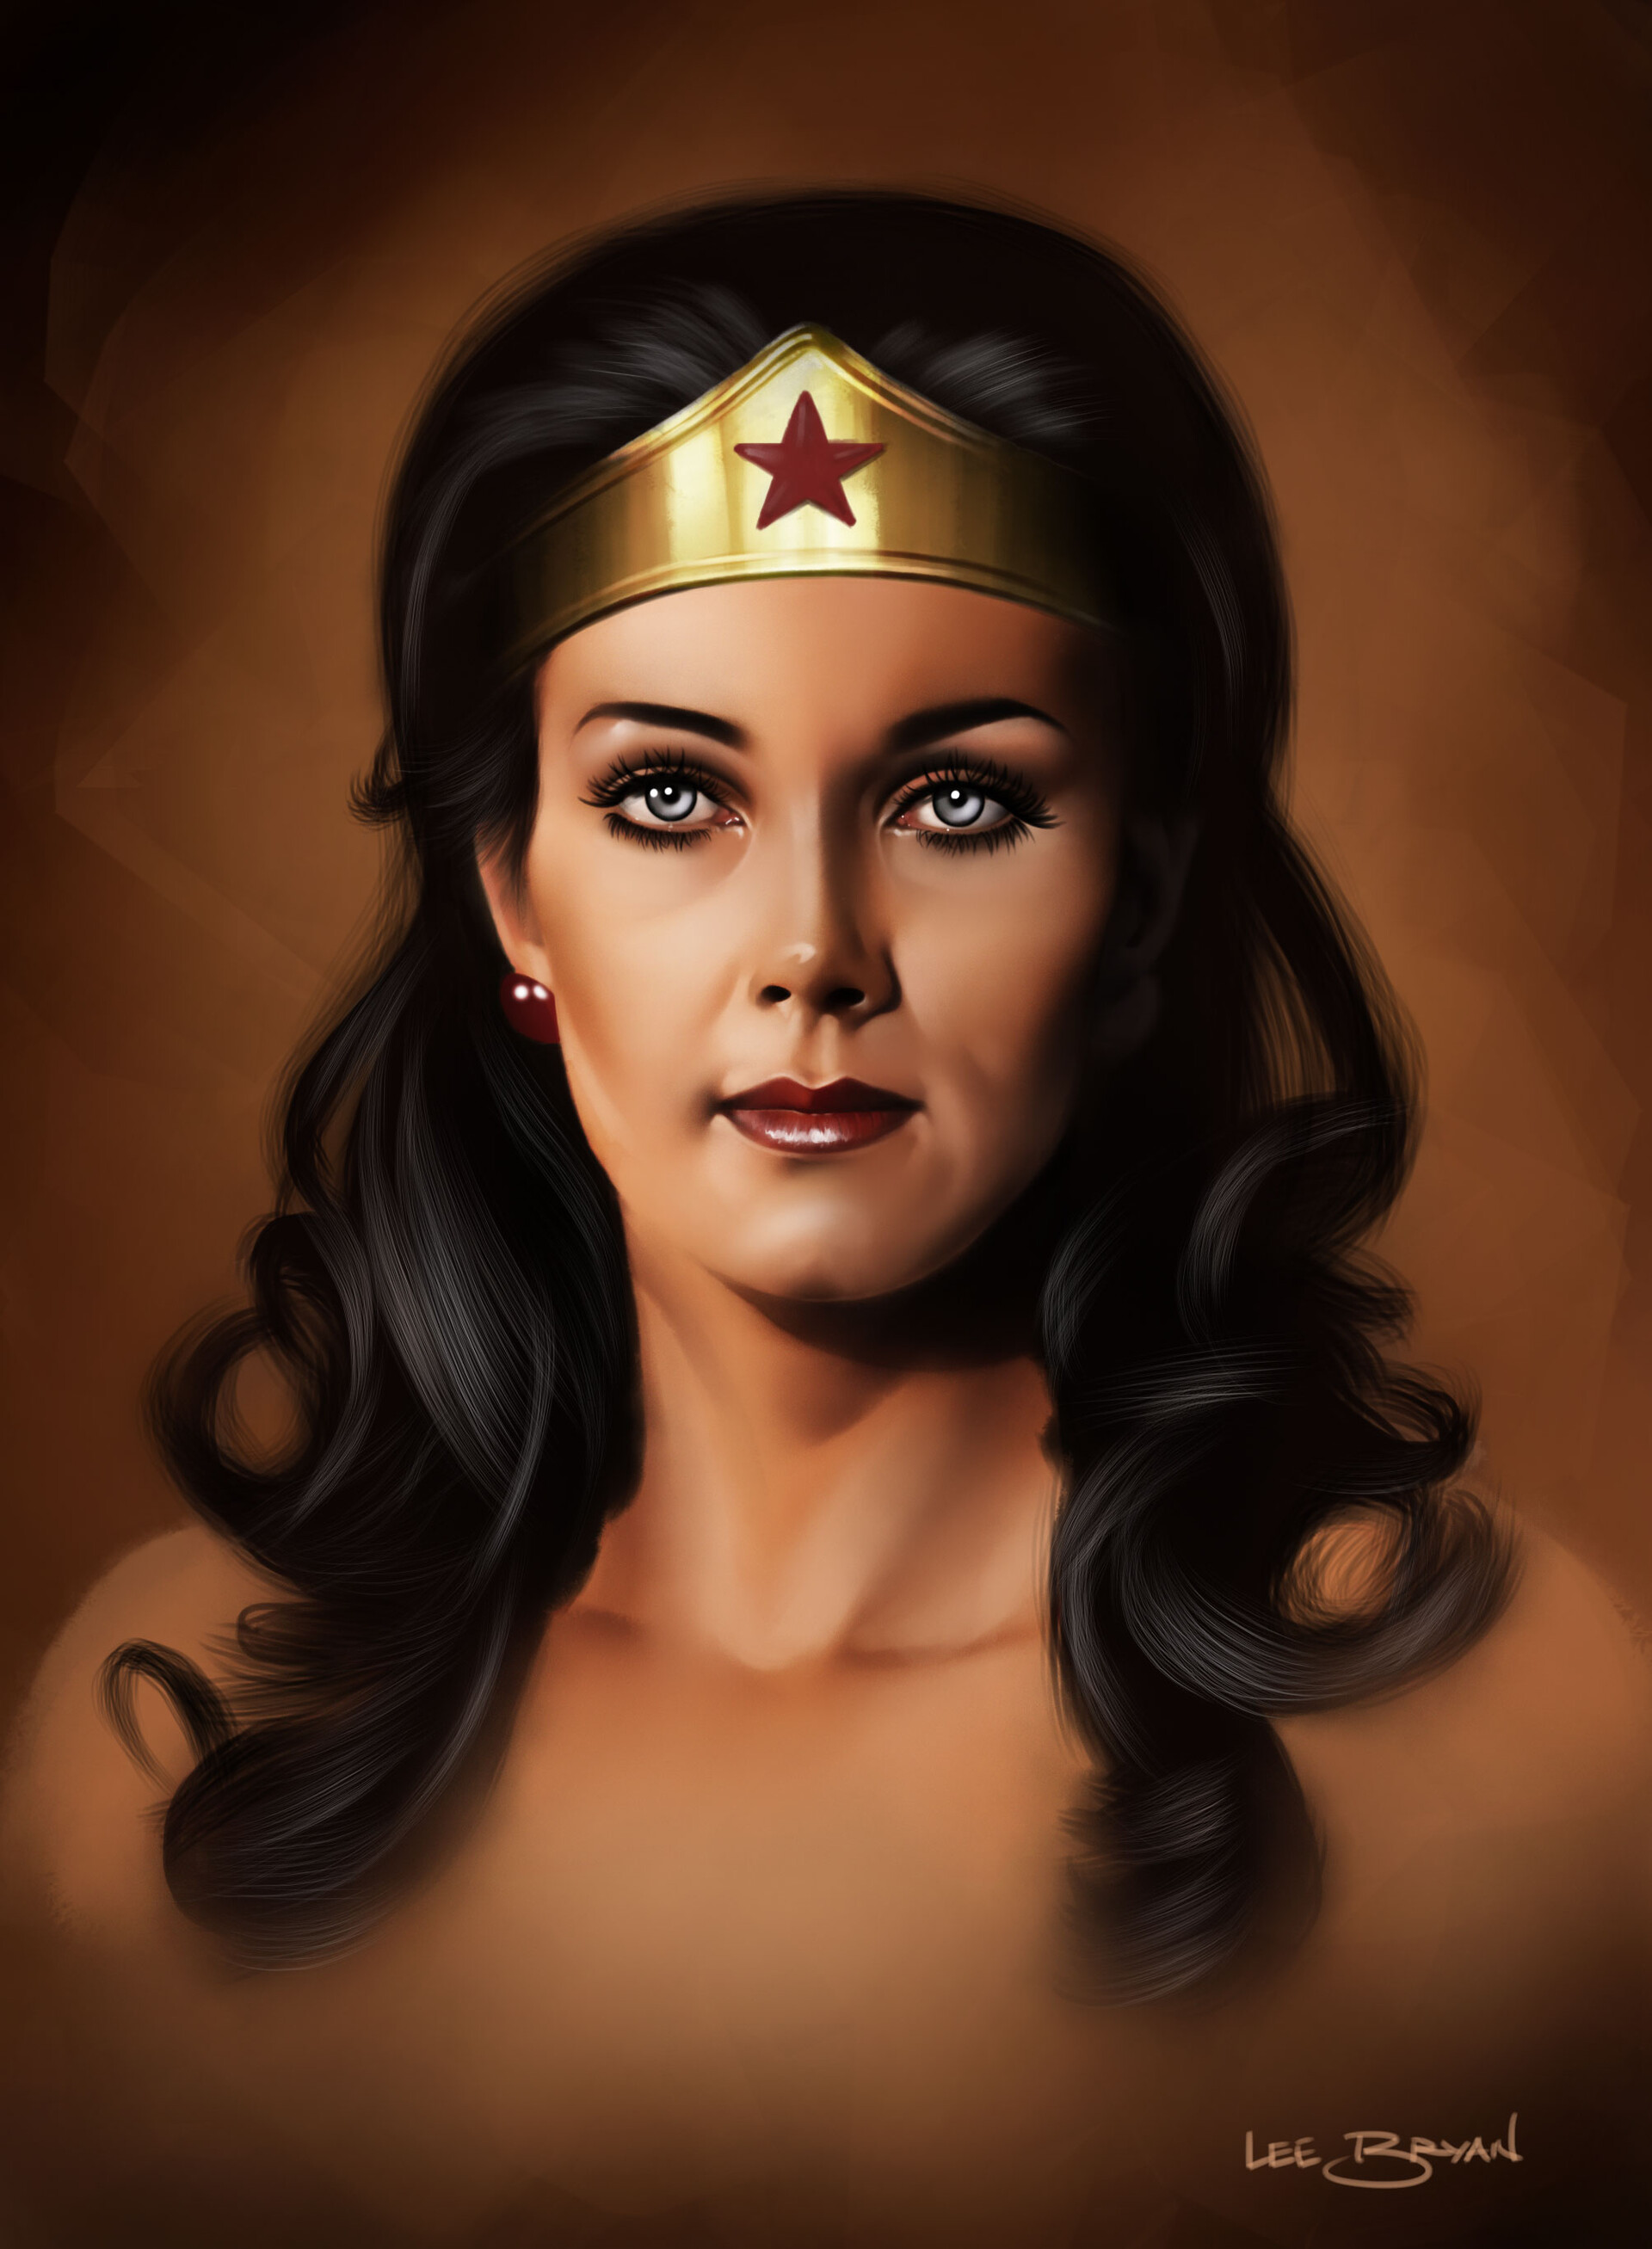 ArtStation - Lynda Carter as Wonder Woman